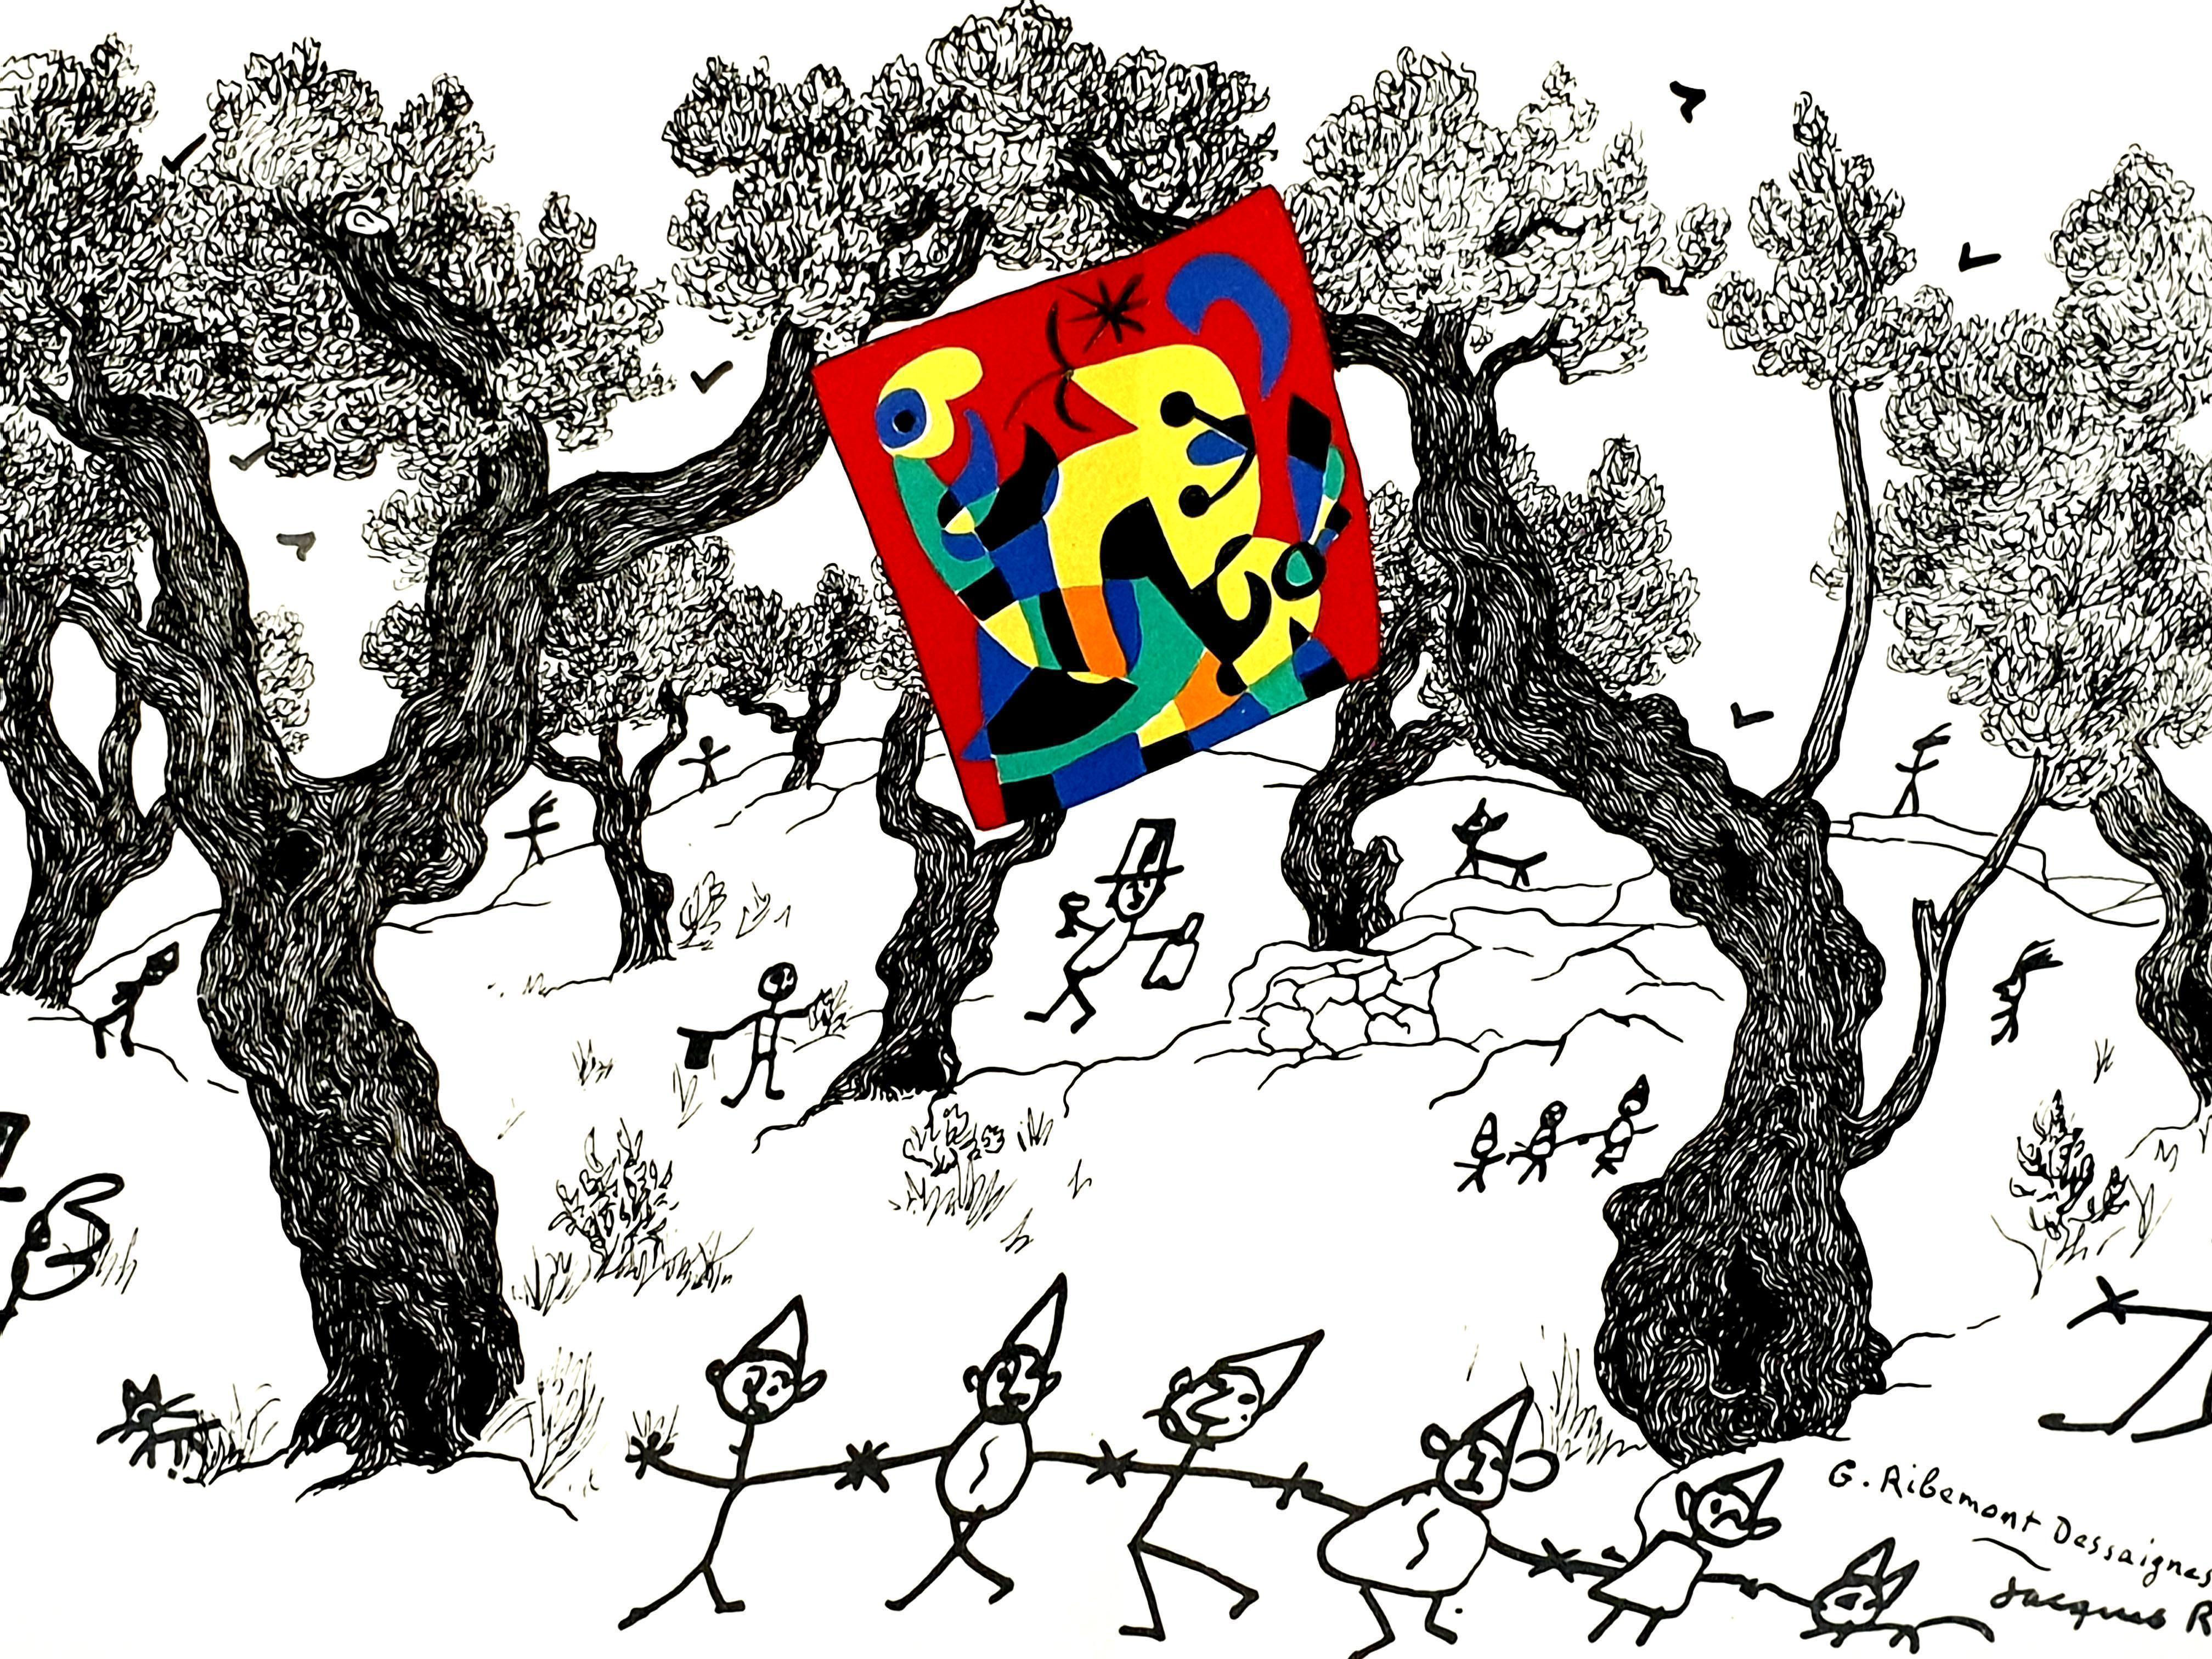 Joan Miro - The Party - Original Lithograph - Print by Joan Miró